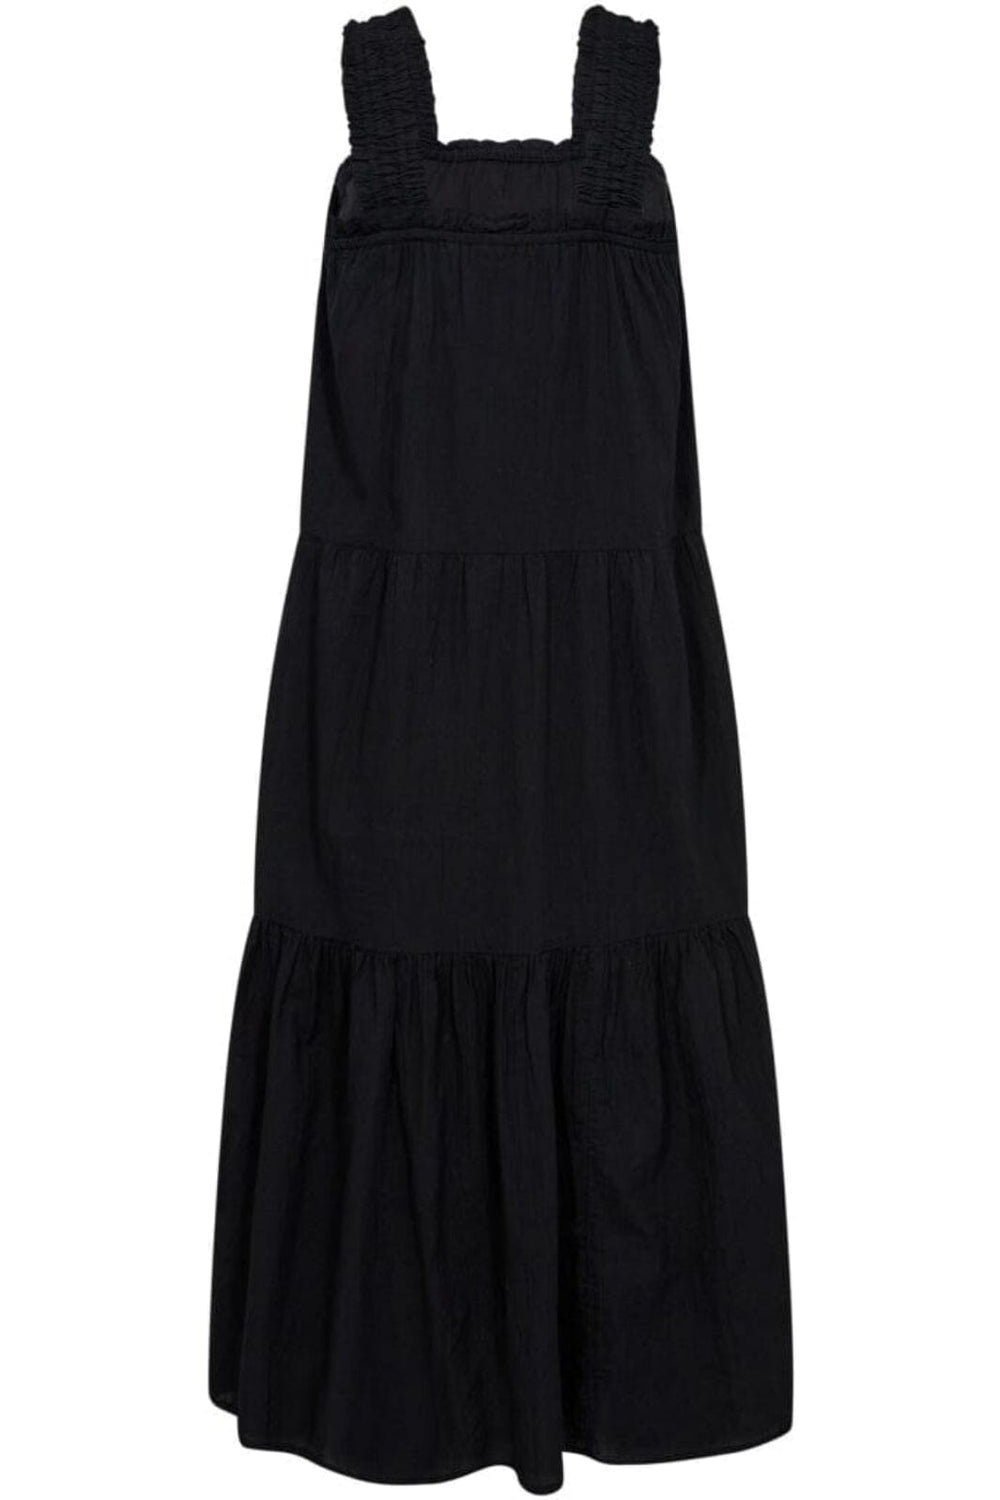 Gossia - LineGO Dress - Black Kjoler 